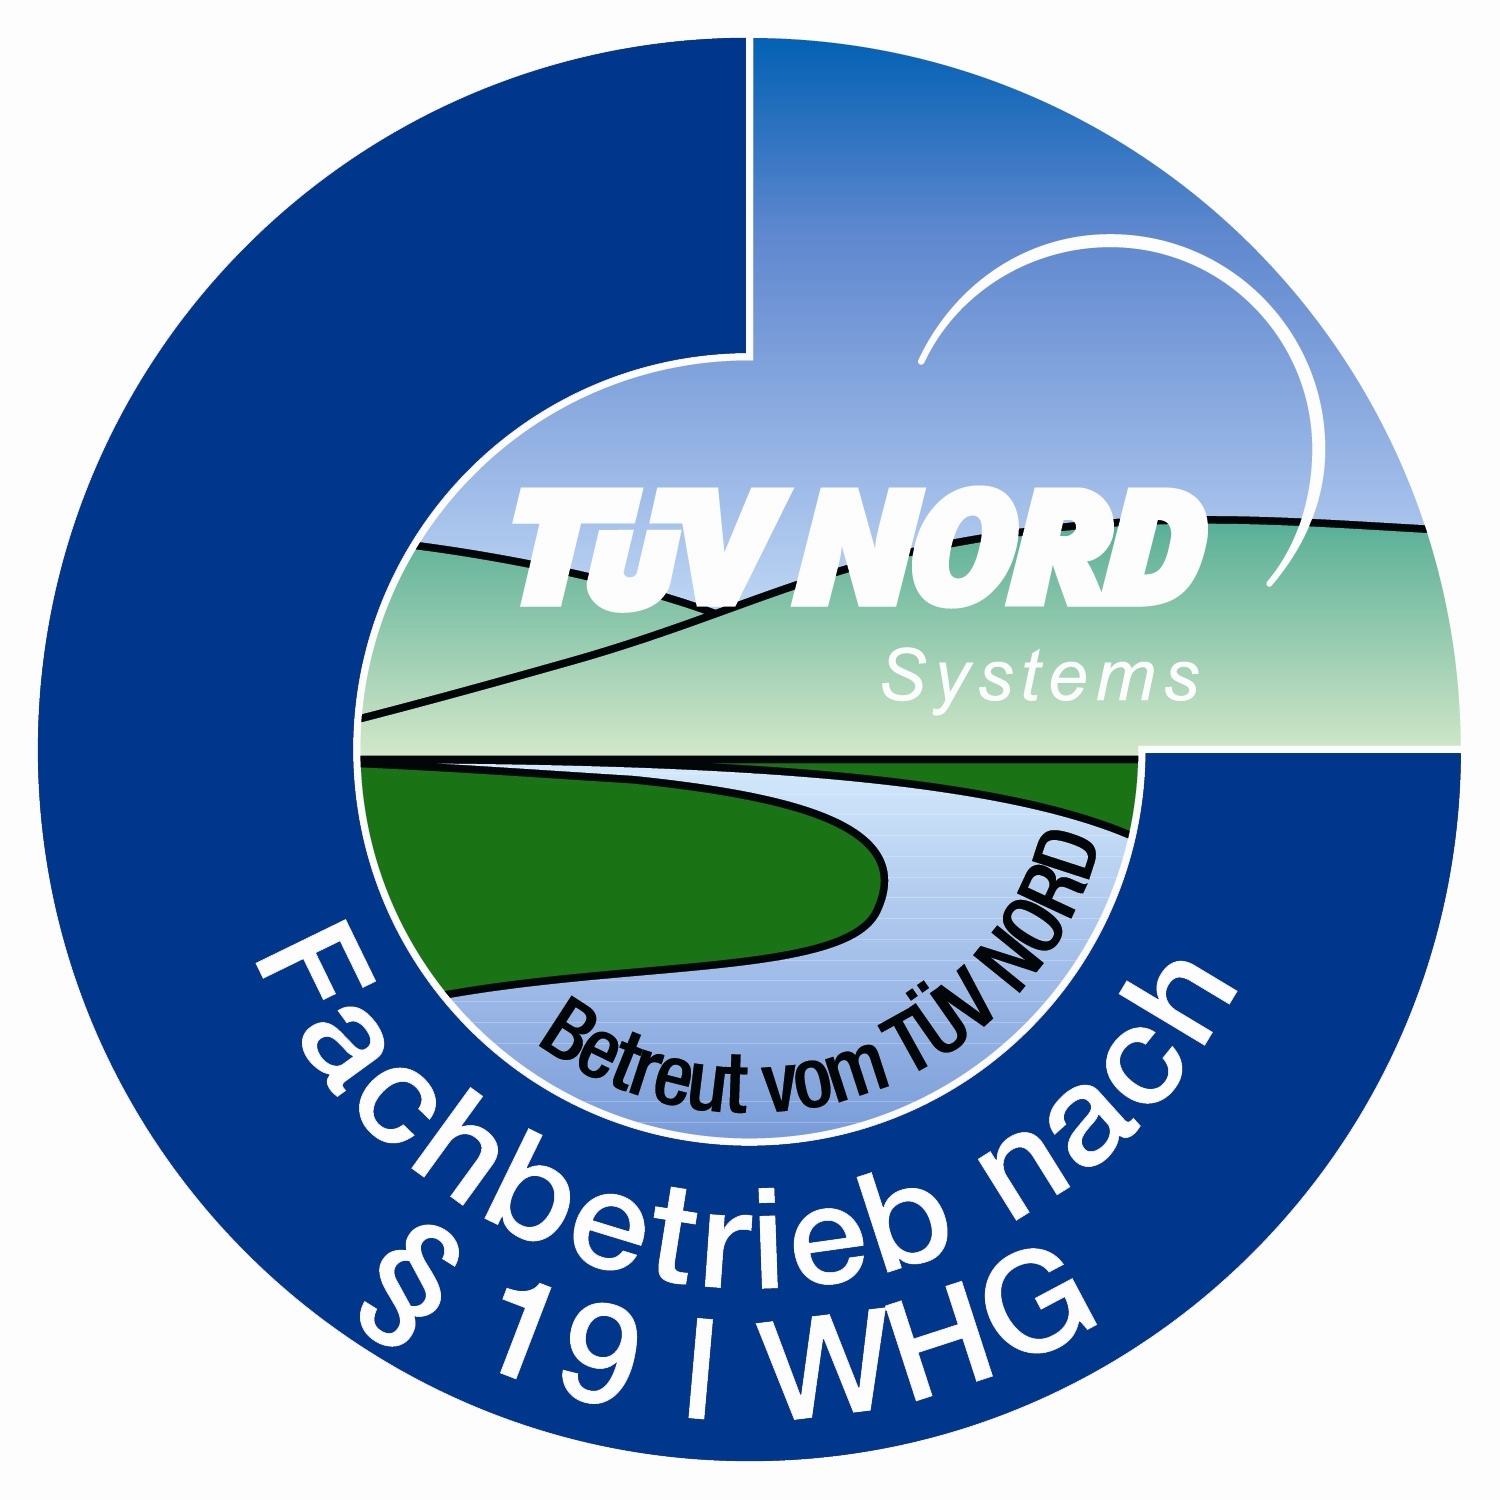 AXA - Maschinen und Armaturen - TÜV Nord zertifiziert nach § 19 I WHG (Wasserhaushaltsgesetz)